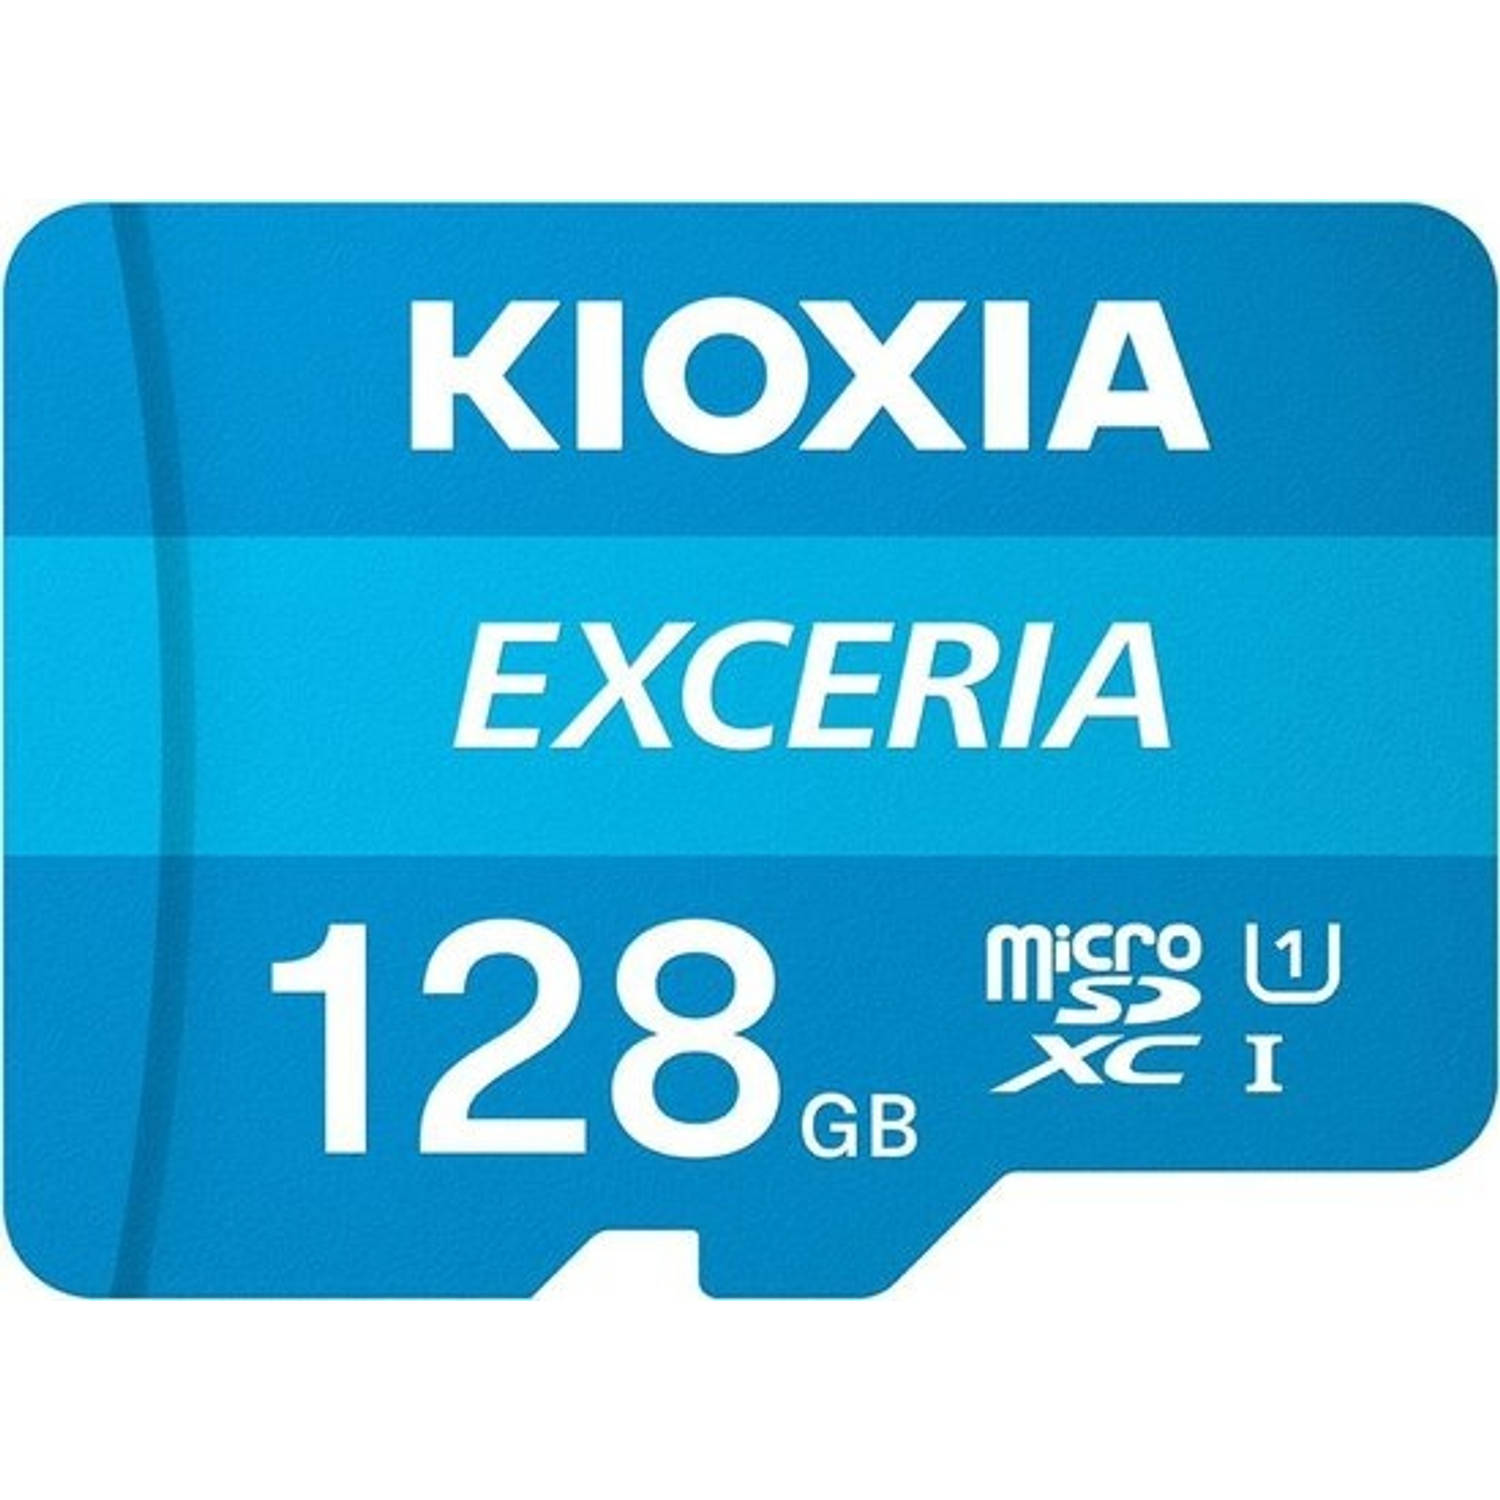 Kioxia Exceria 128 GB MicroSDXC UHS-I Klasse 10